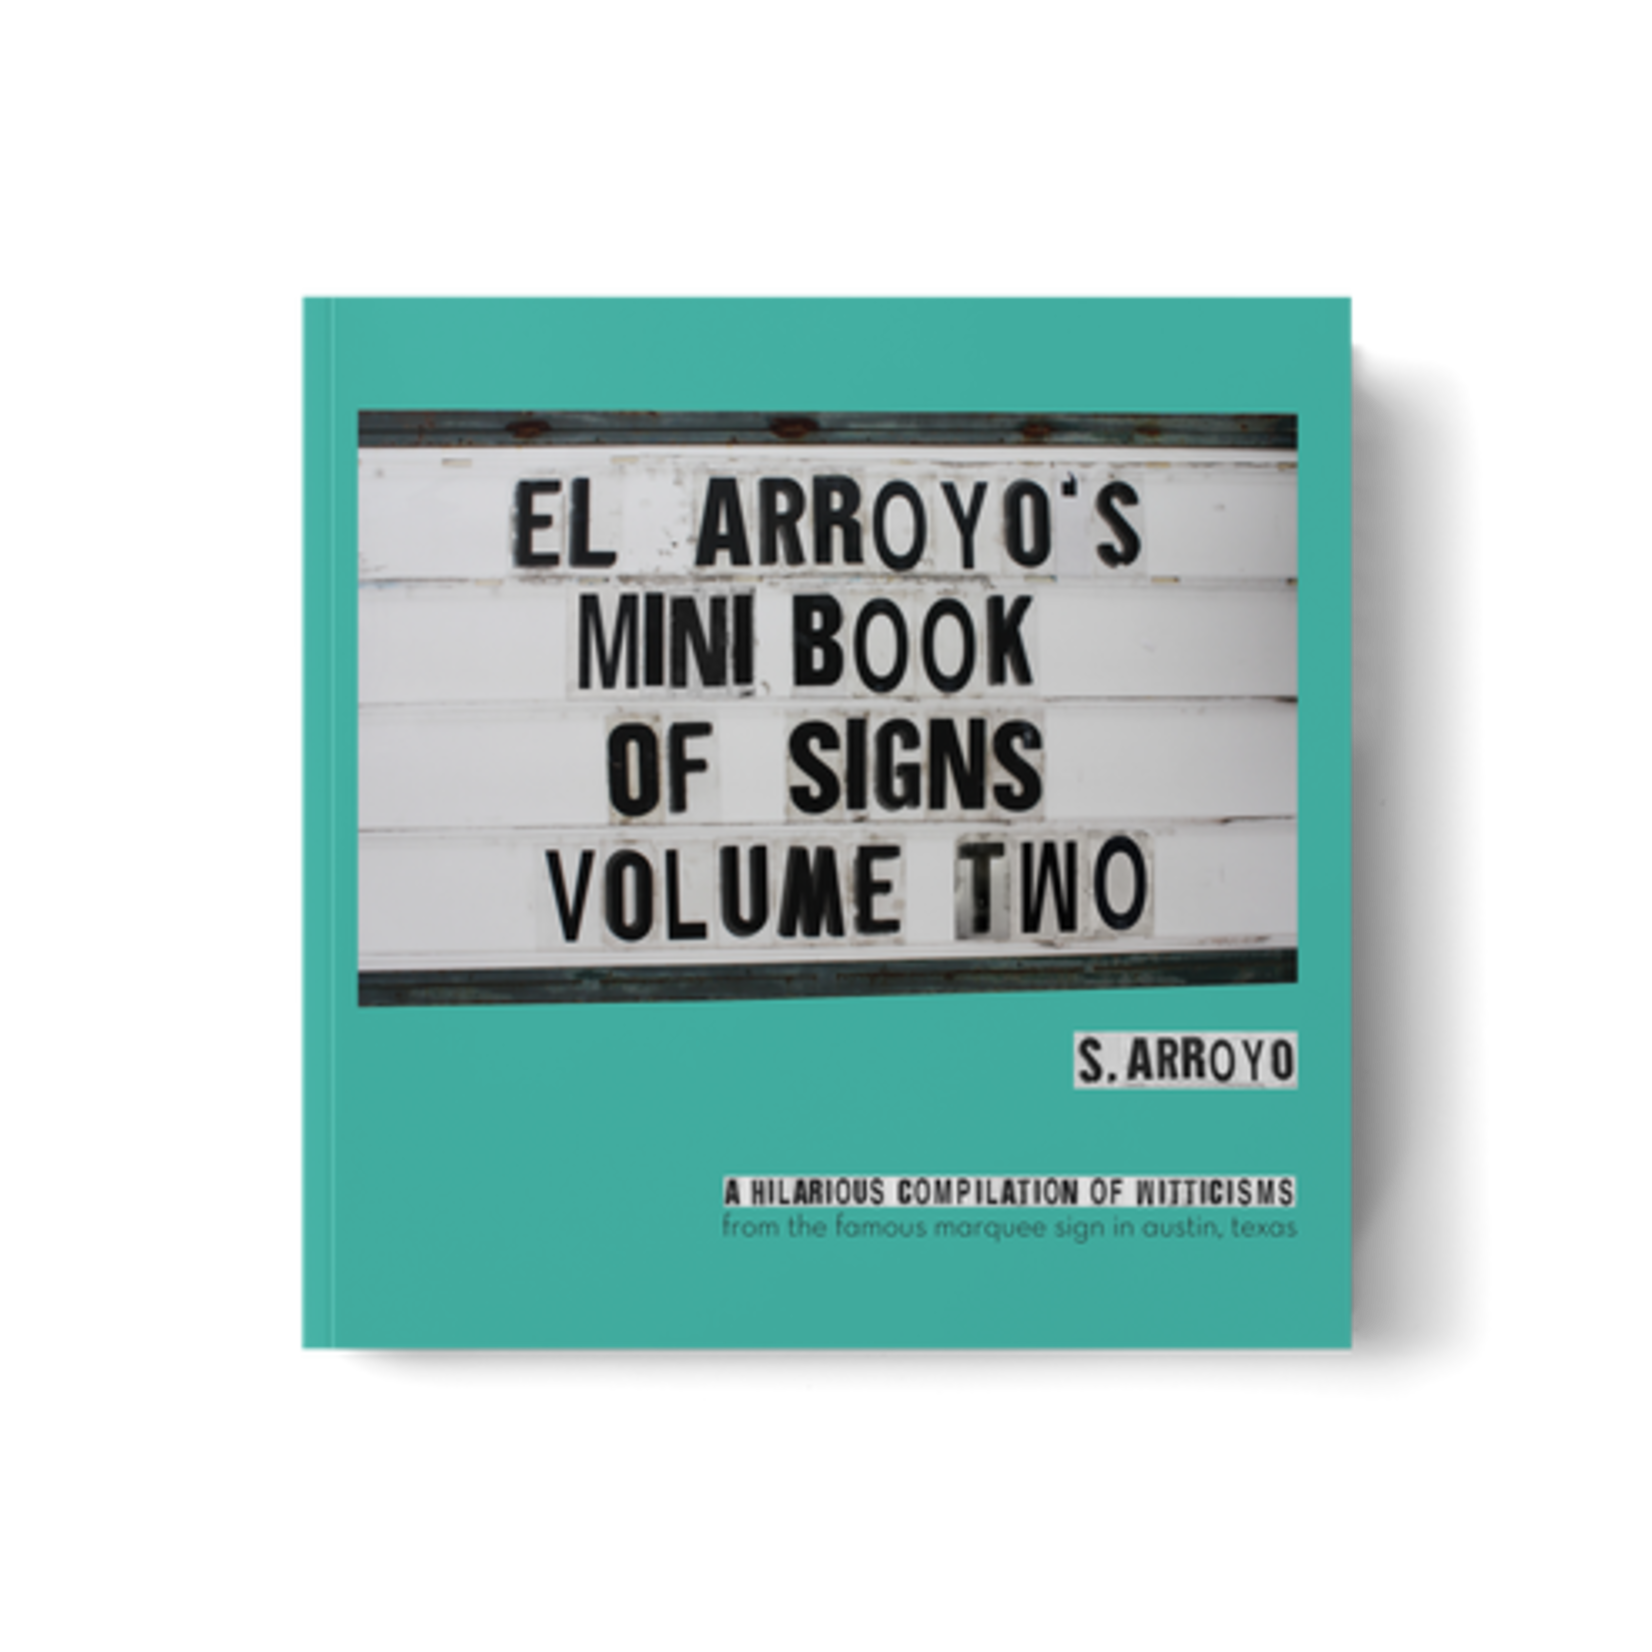 El Arroyo El Arroyo's Mini Book of Signs Vol. 2